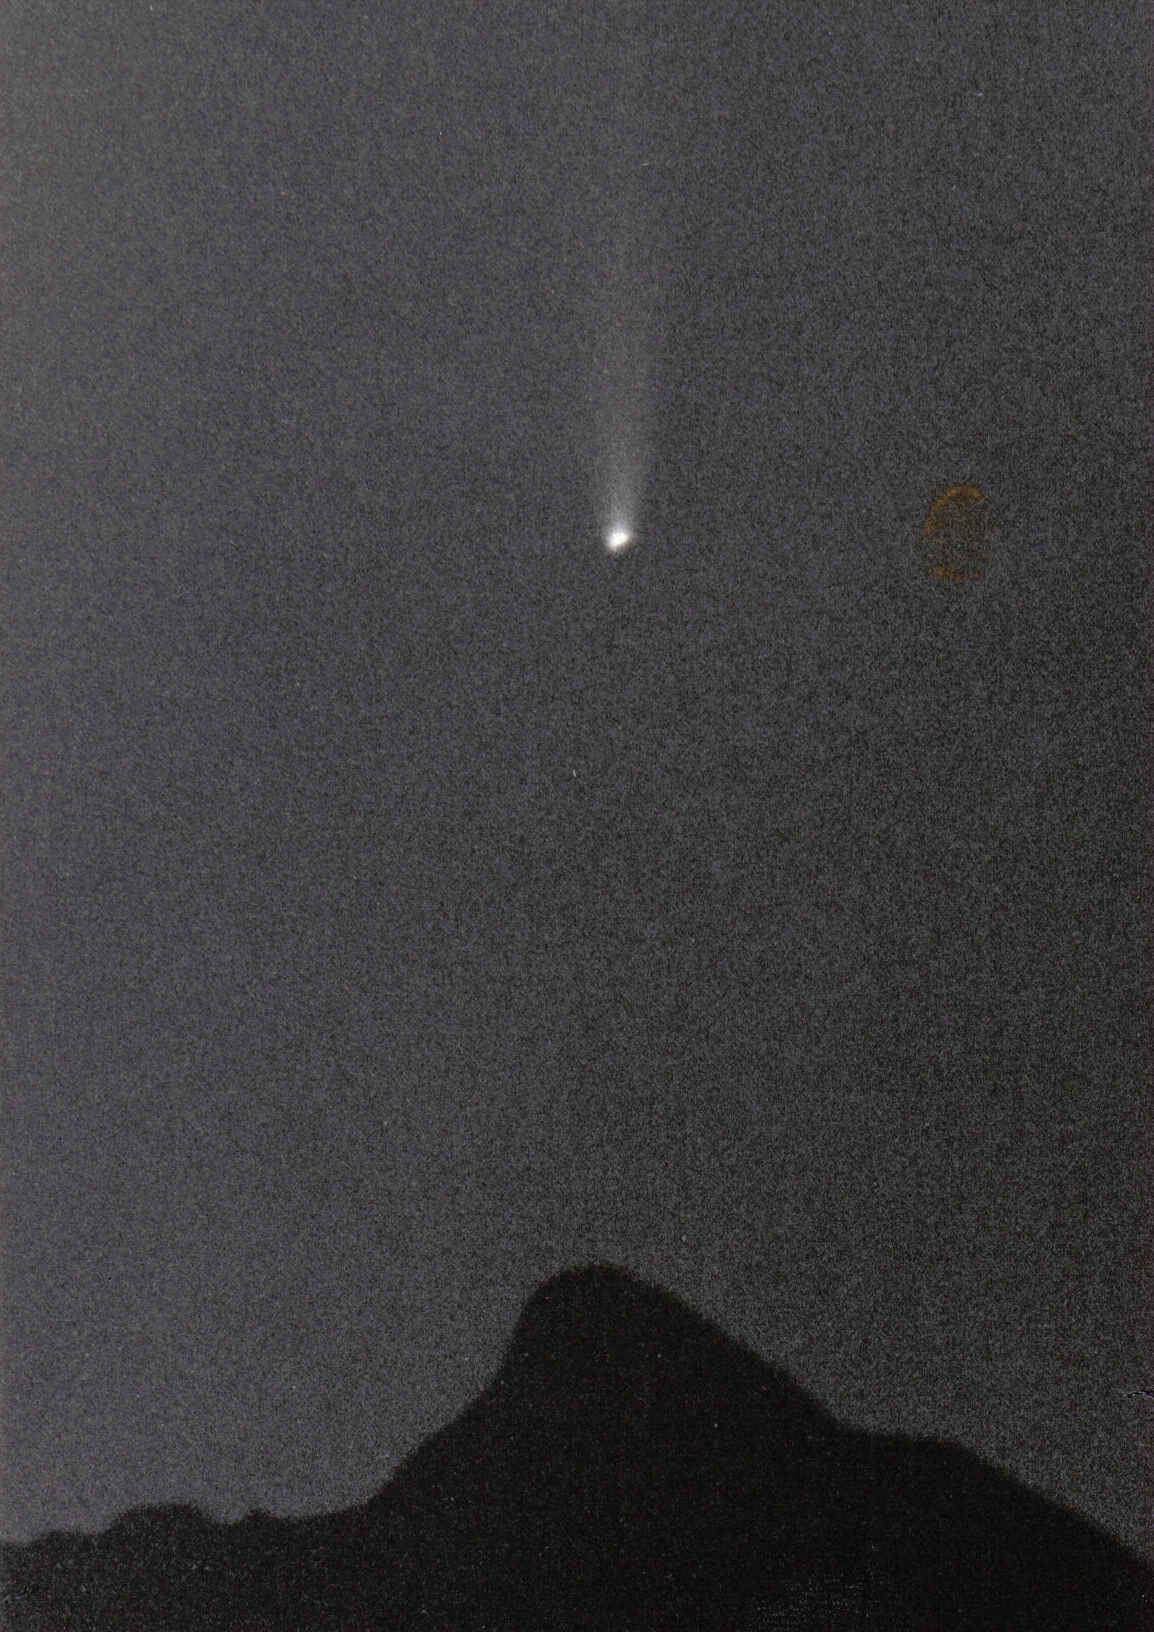 Komet West 05031976 0545h cut02